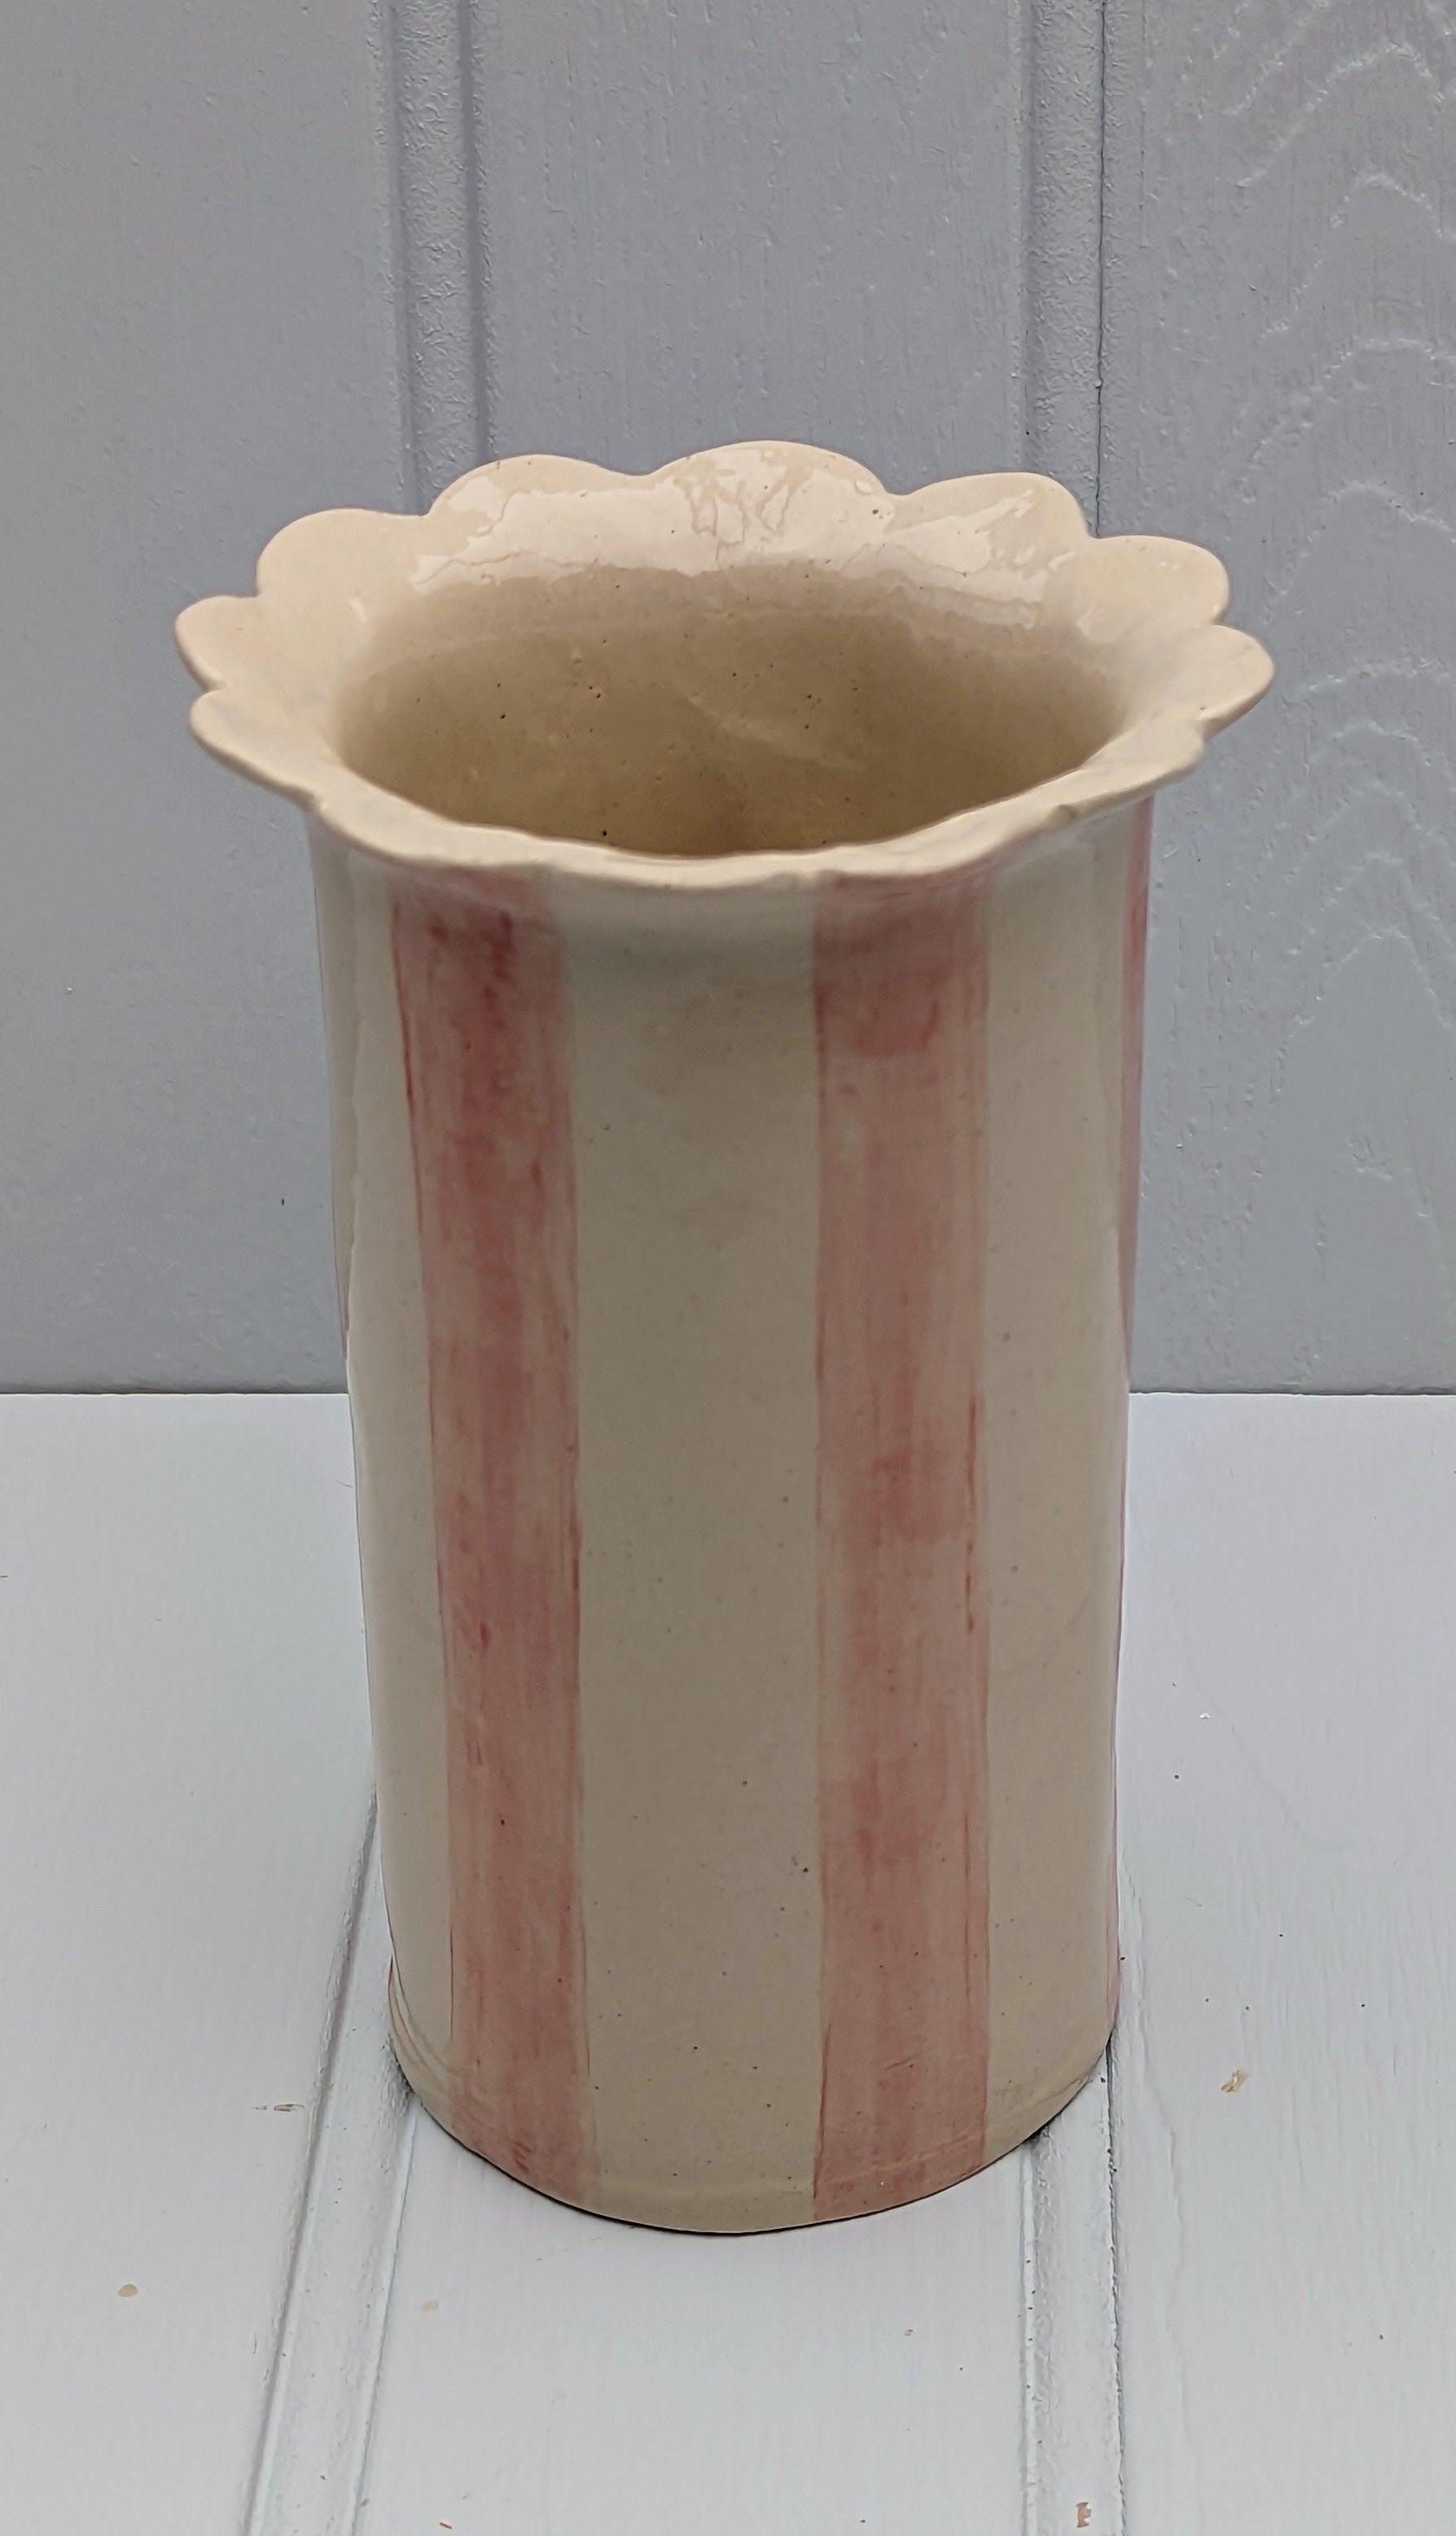 Sea Bramble Ceramics - Large Daisy vase. Handmade, Stoneware, with Sea Brambles' signature scallops. Shown here in pink stripes.